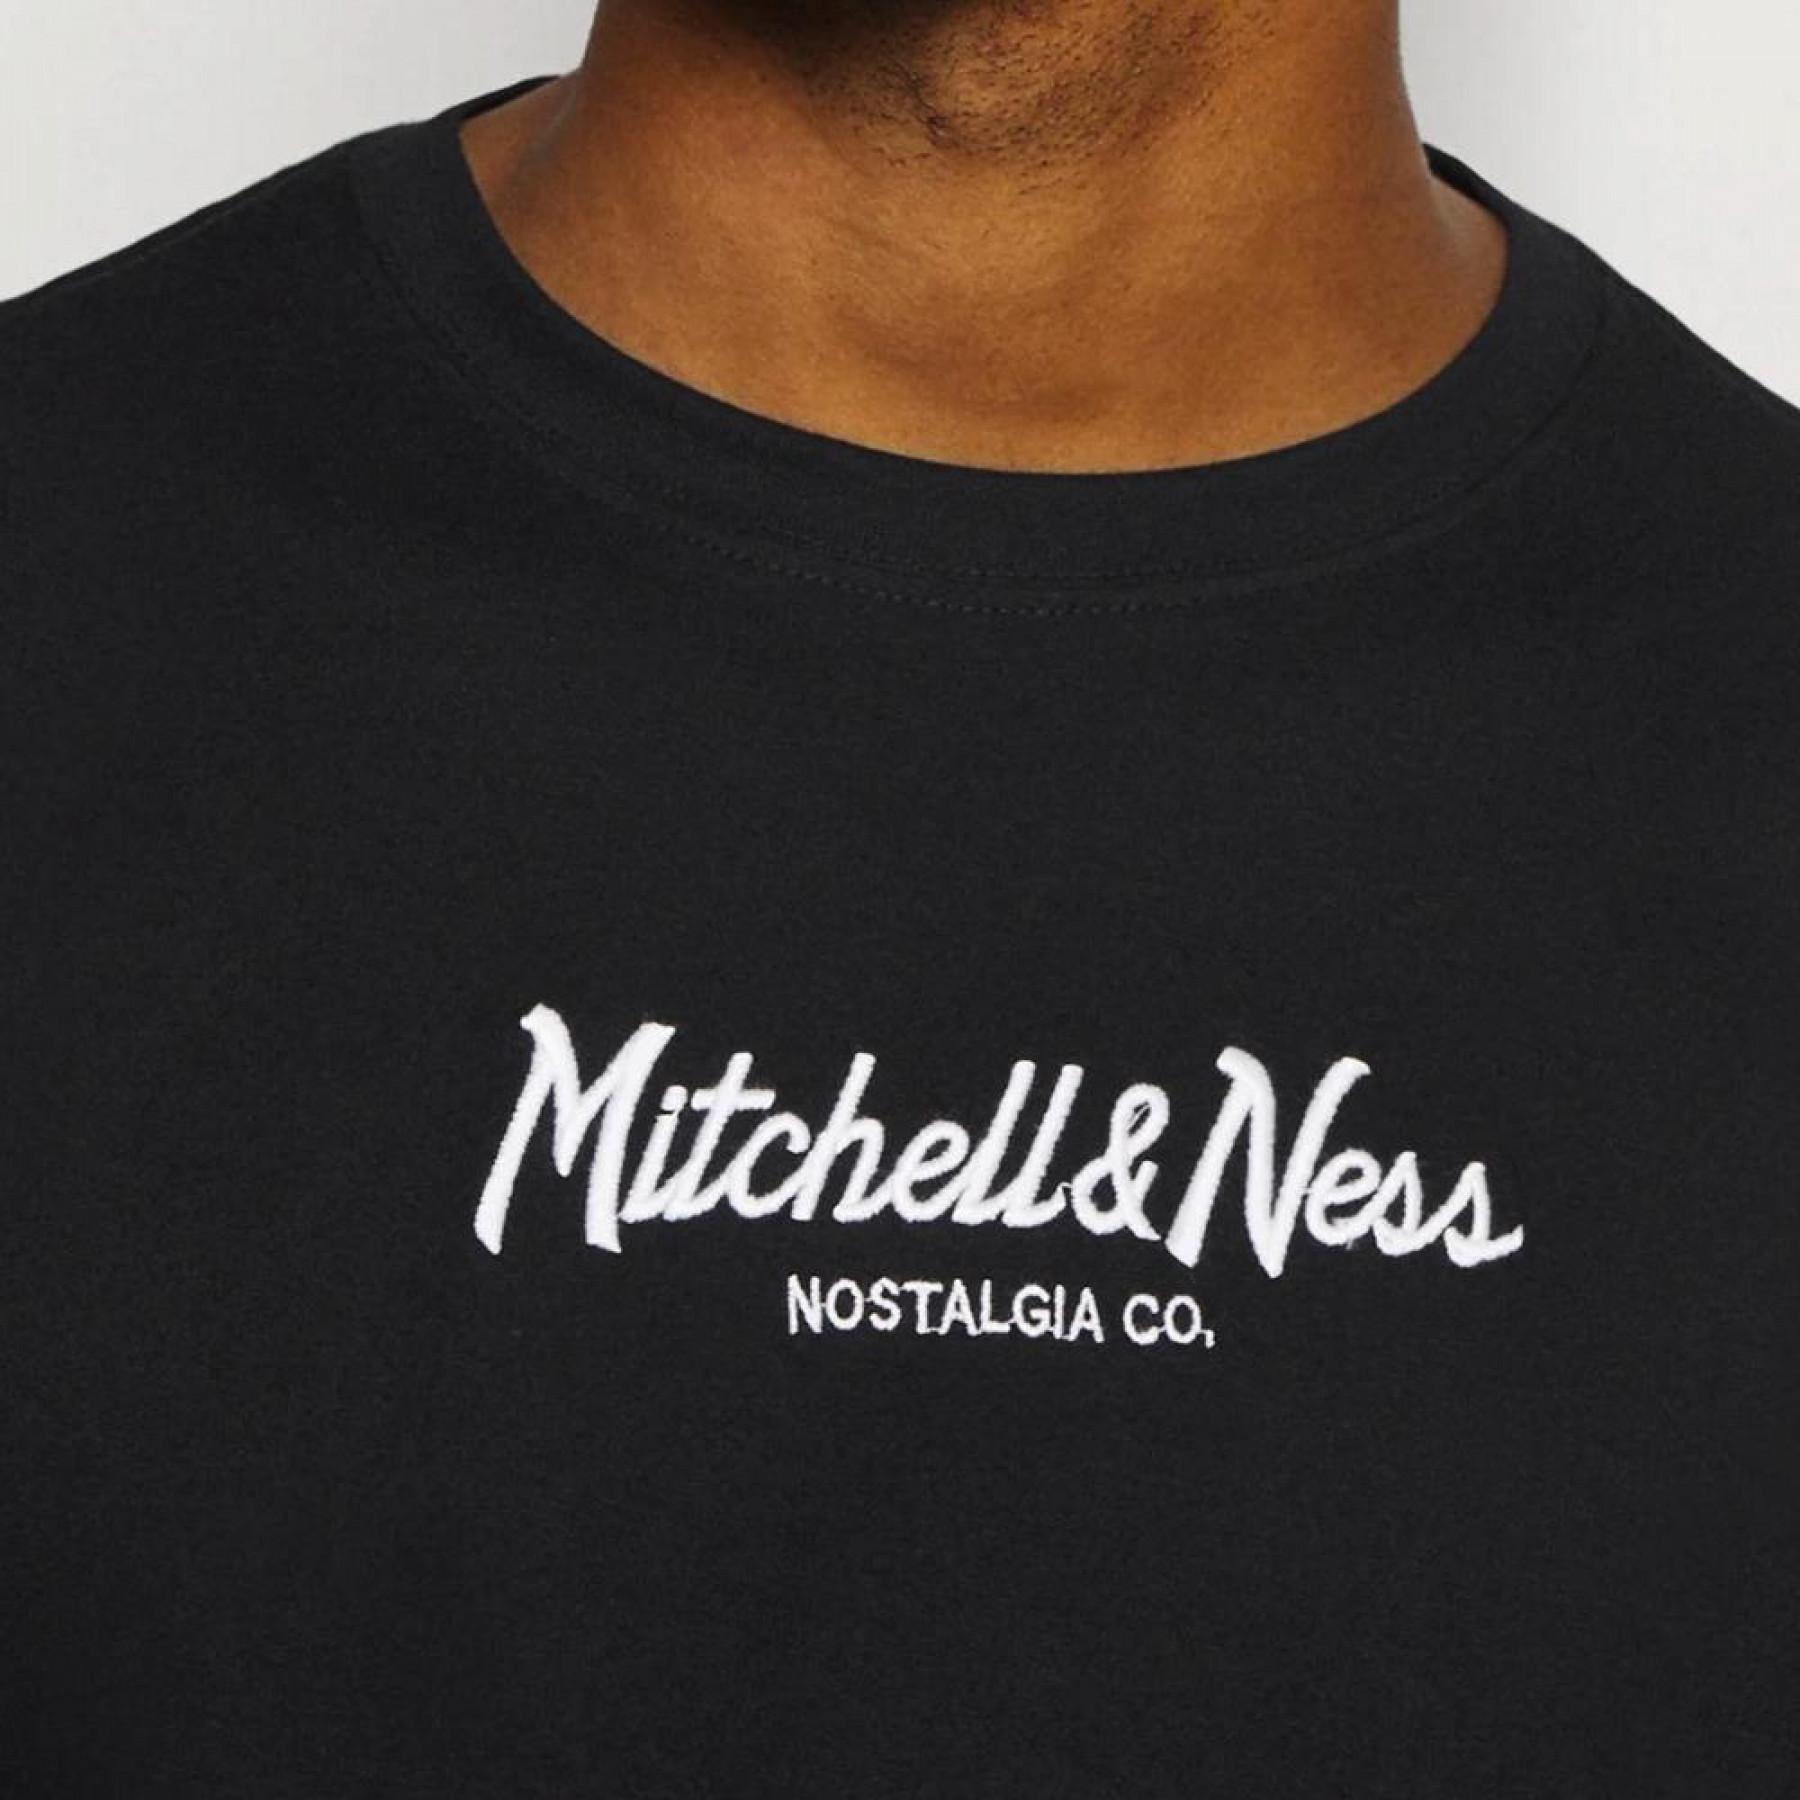 Camiseta Mitchell & Ness classic logo